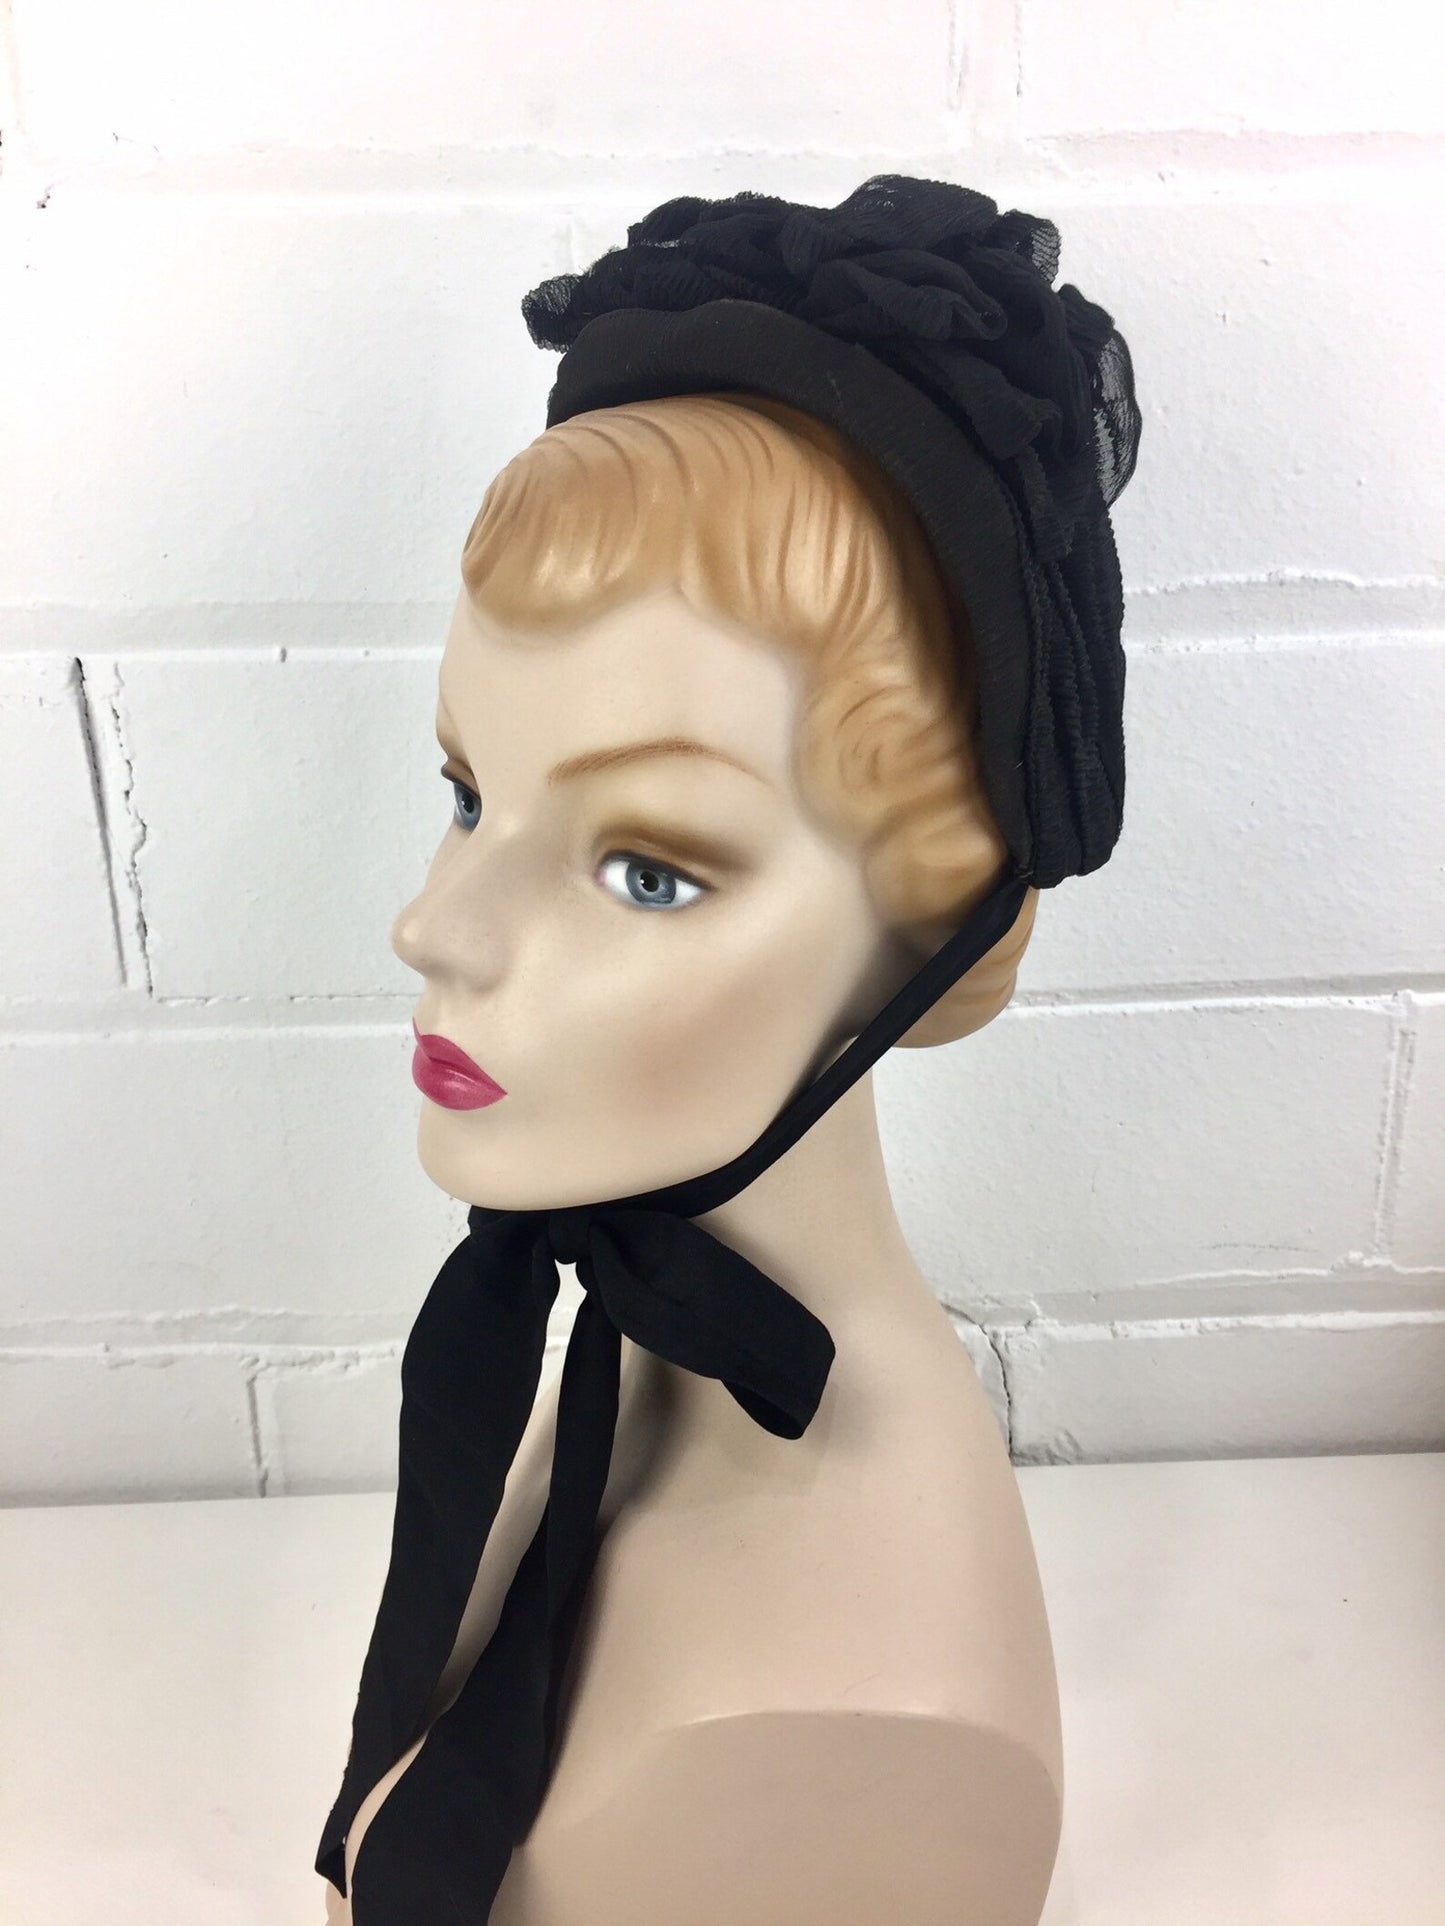 Antique Victorian Black Bonnet Cap With Bow & Ribbon Ties, Black Crepe, Net Veil Lining, Victorian Mourning, Civil War Clothing